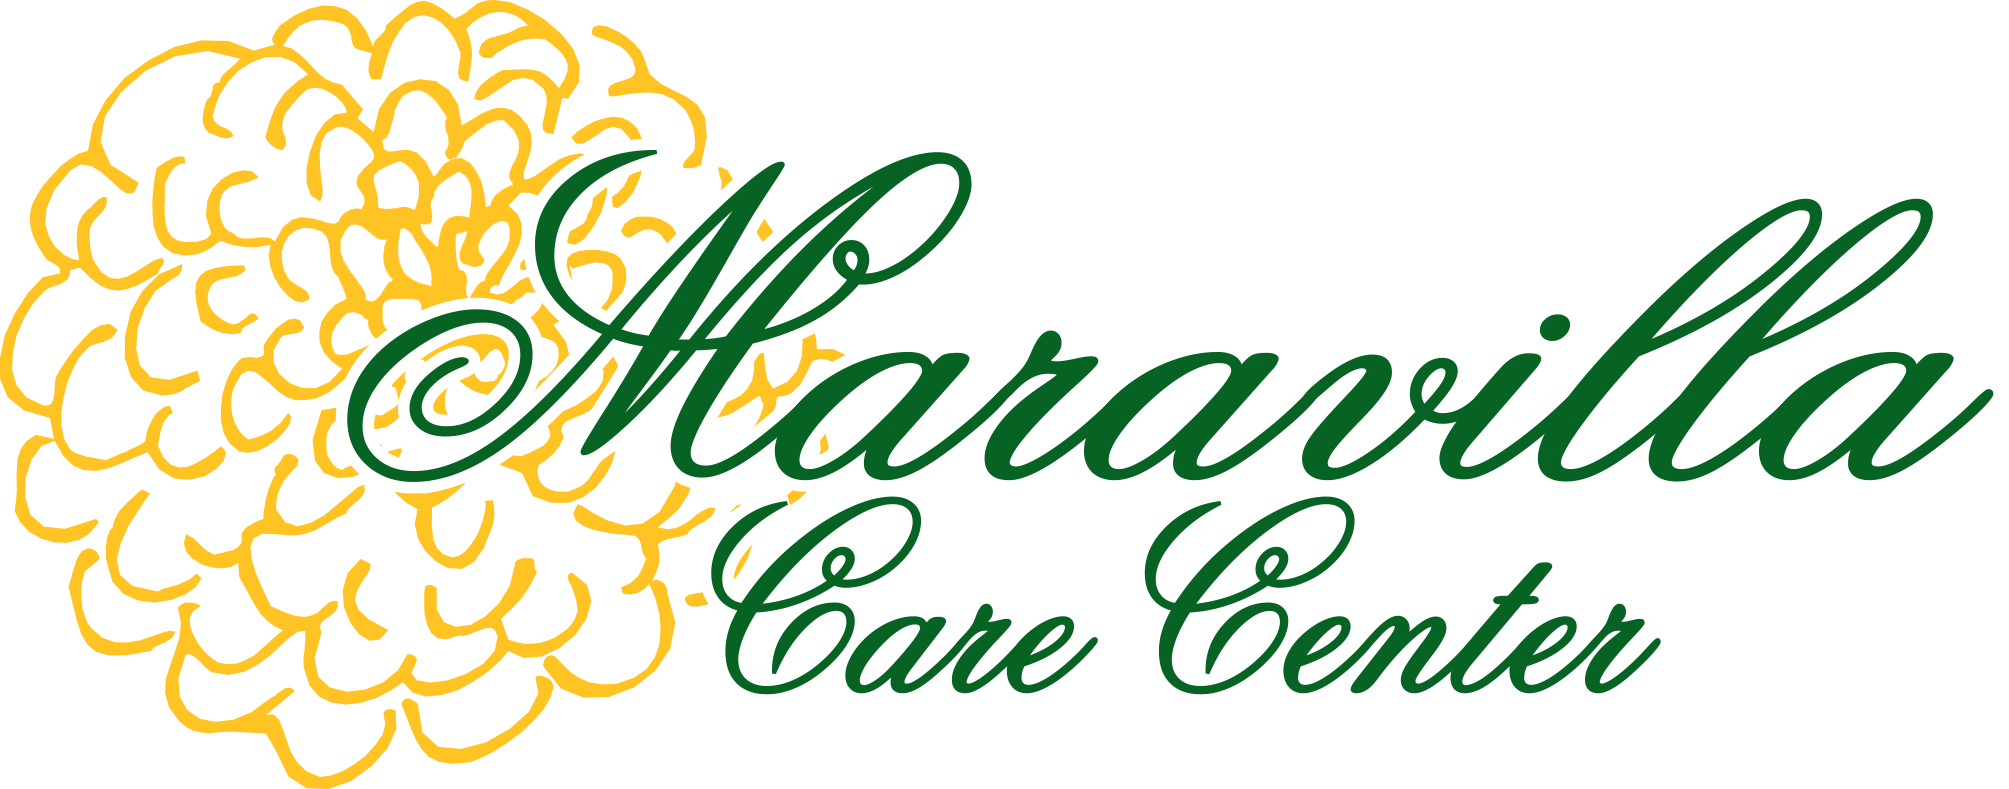 Maravilla Care Center [logo]